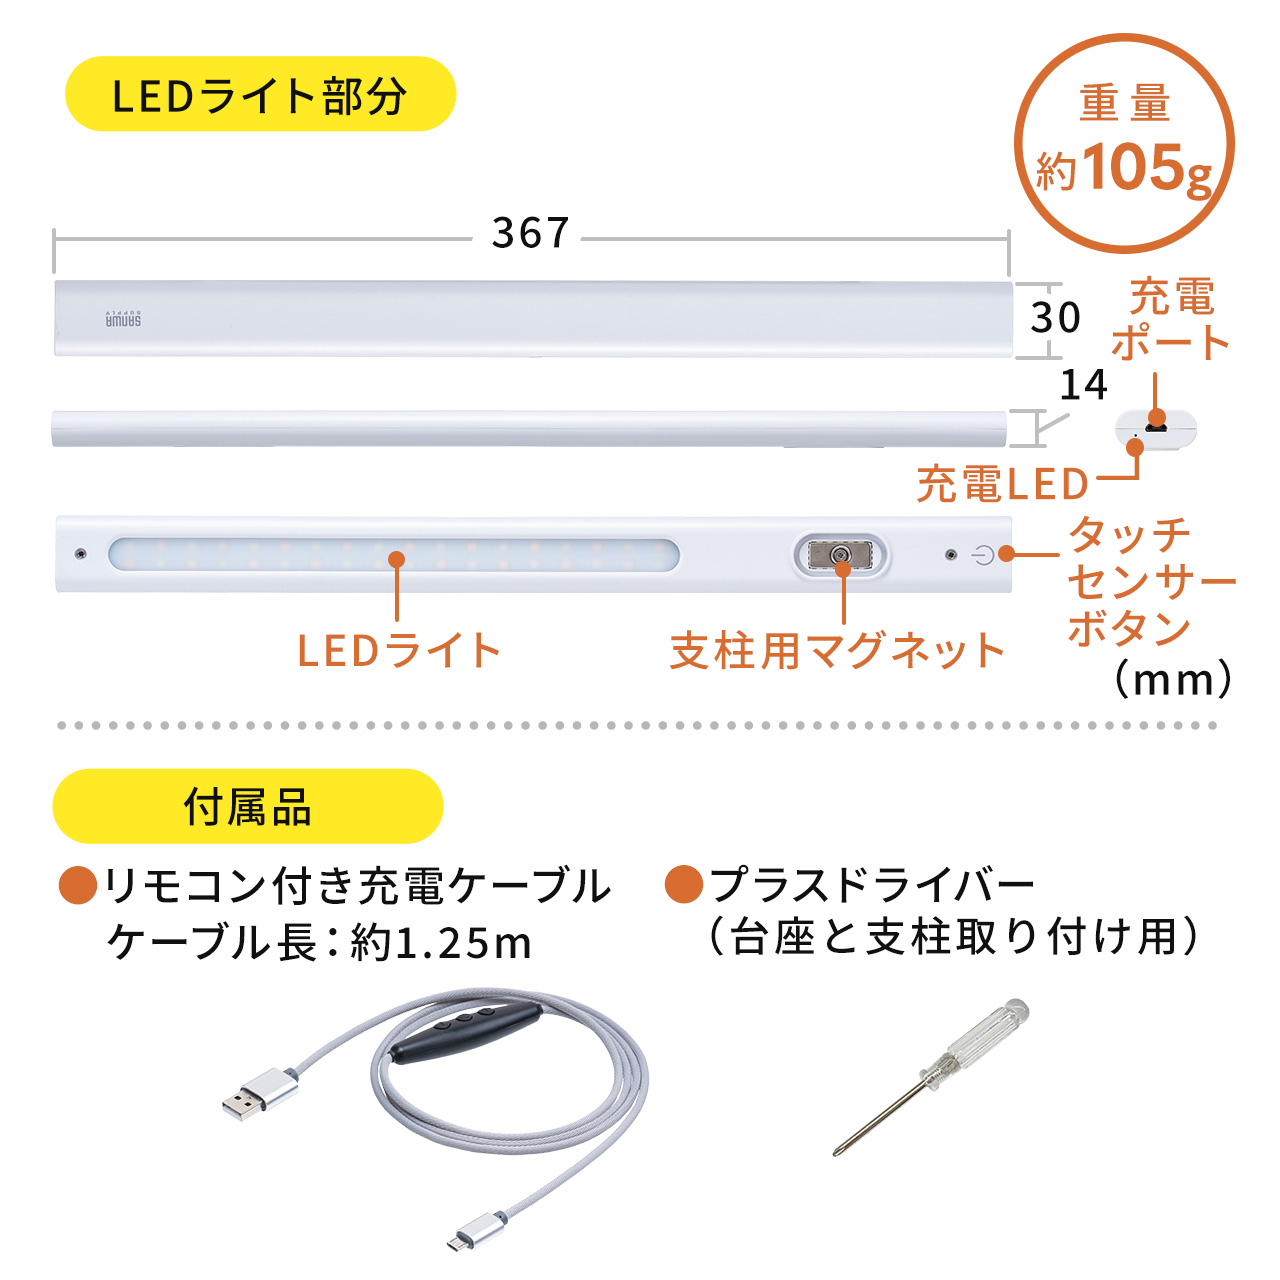 LEDデスクライト 充電式 コードレス 角度調整可能 3段階調色 無段階調光 最大263ルーメン マグネット タッチセンサー ライト着脱式  800-LED047の販売商品 | 通販ならサンワダイレクト